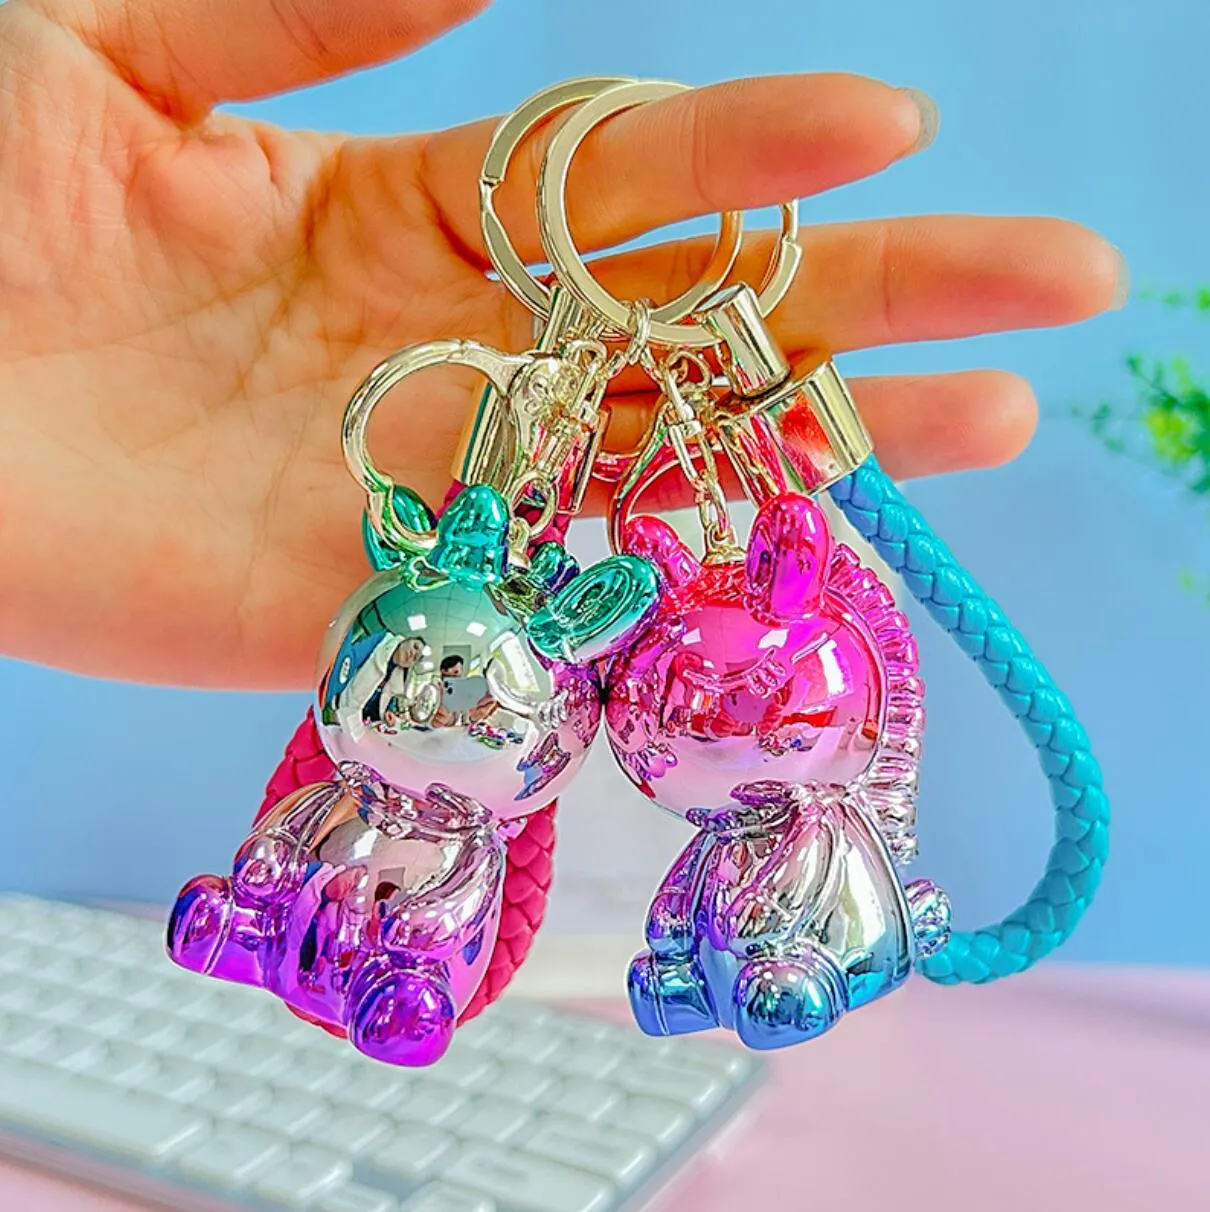 Cute Cartoon Model Keychain Key Chains Ring Holder Fashion Cool Designe Keychains for Porte Clef Gift Men Women Car Bag Pendant Accessories No Box